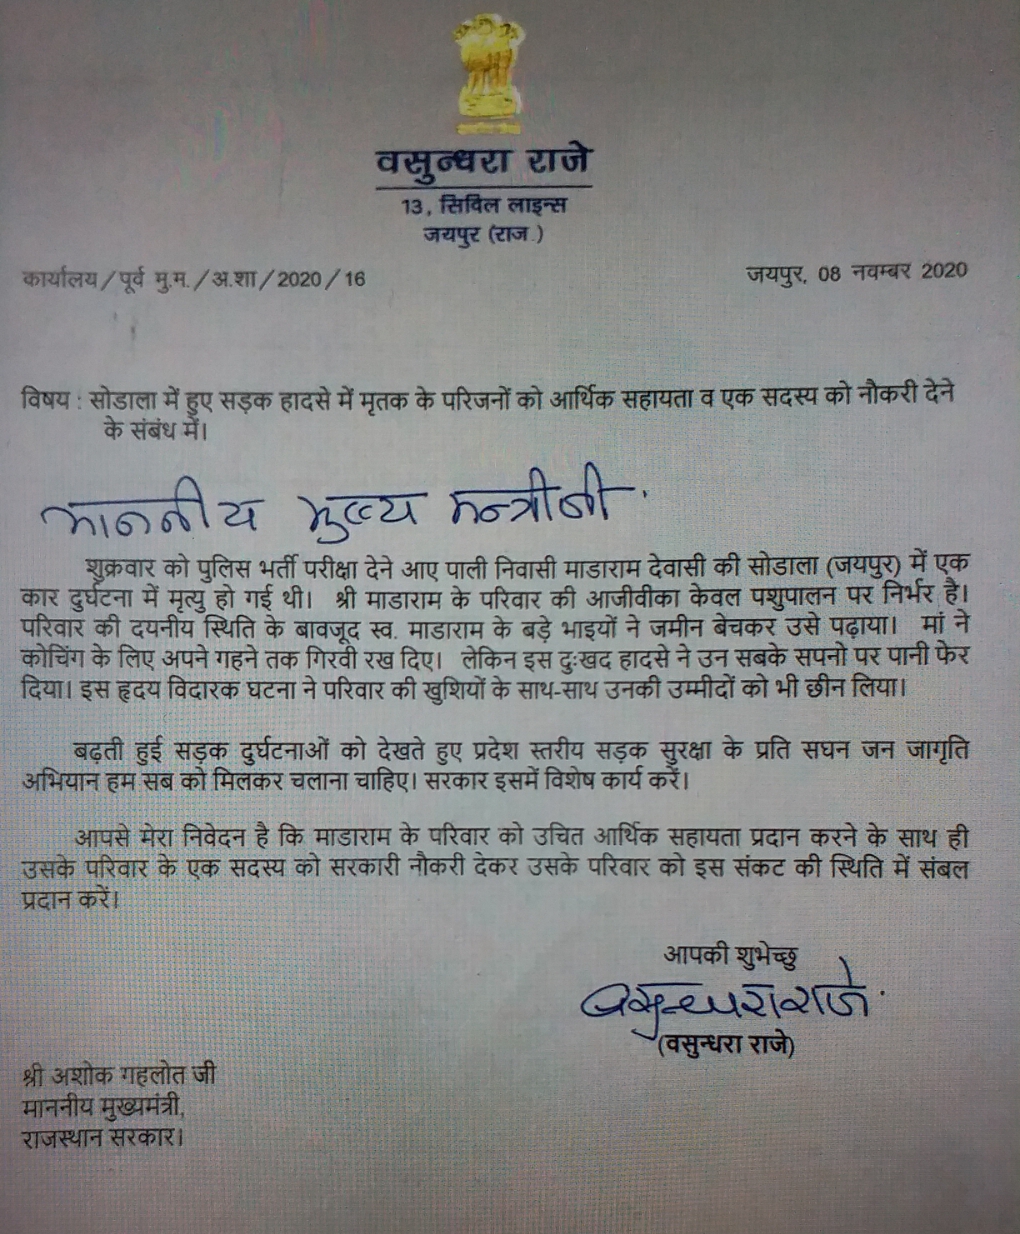 Vasundhara Raje wrote a letter to CM Gehlot,  Jaipur road accident